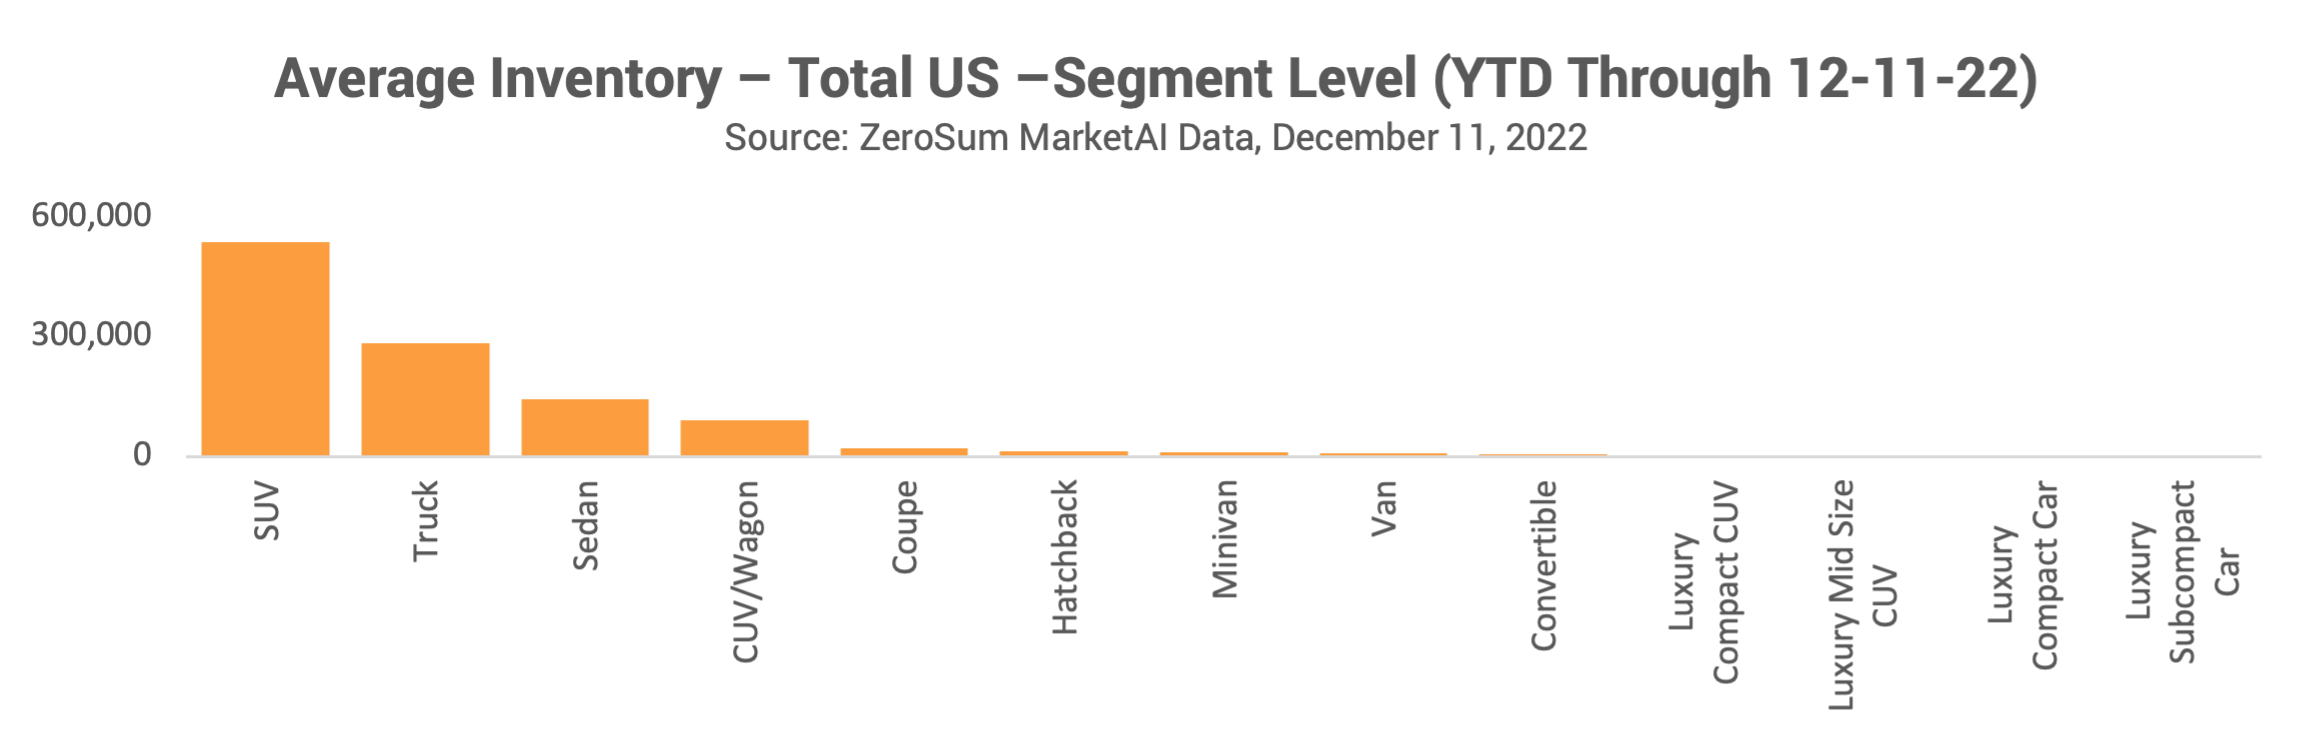 Average Inventory Total US Segment Level